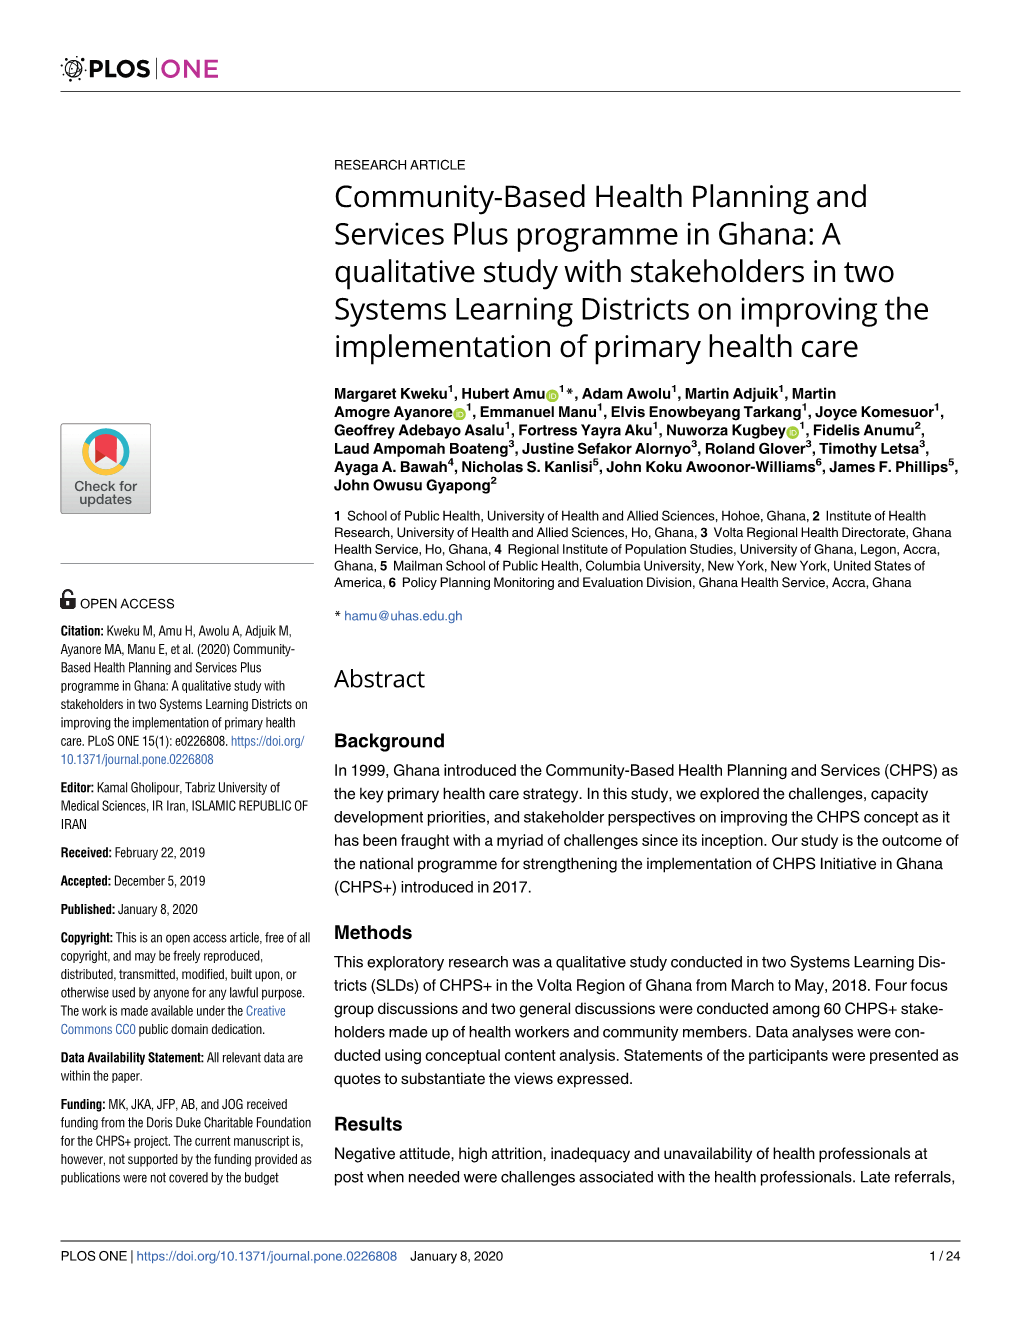 Community-Based Health Planning